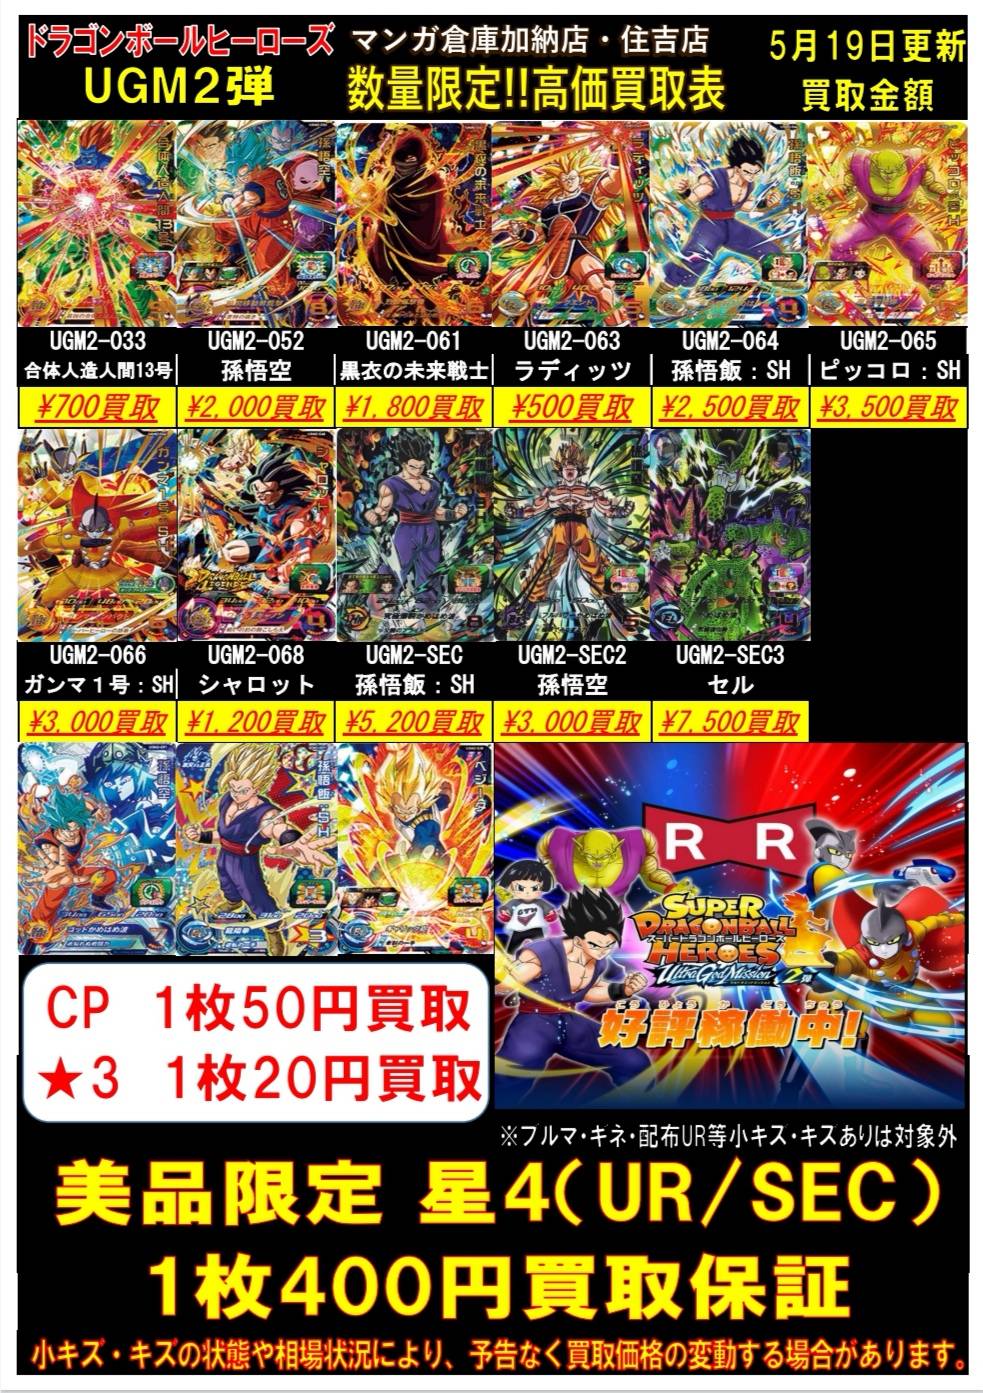 UGM2 13号 ラディッツ ピッコロSH シャロット ドラゴンボールヒーローズ - www.fontec.co.jp